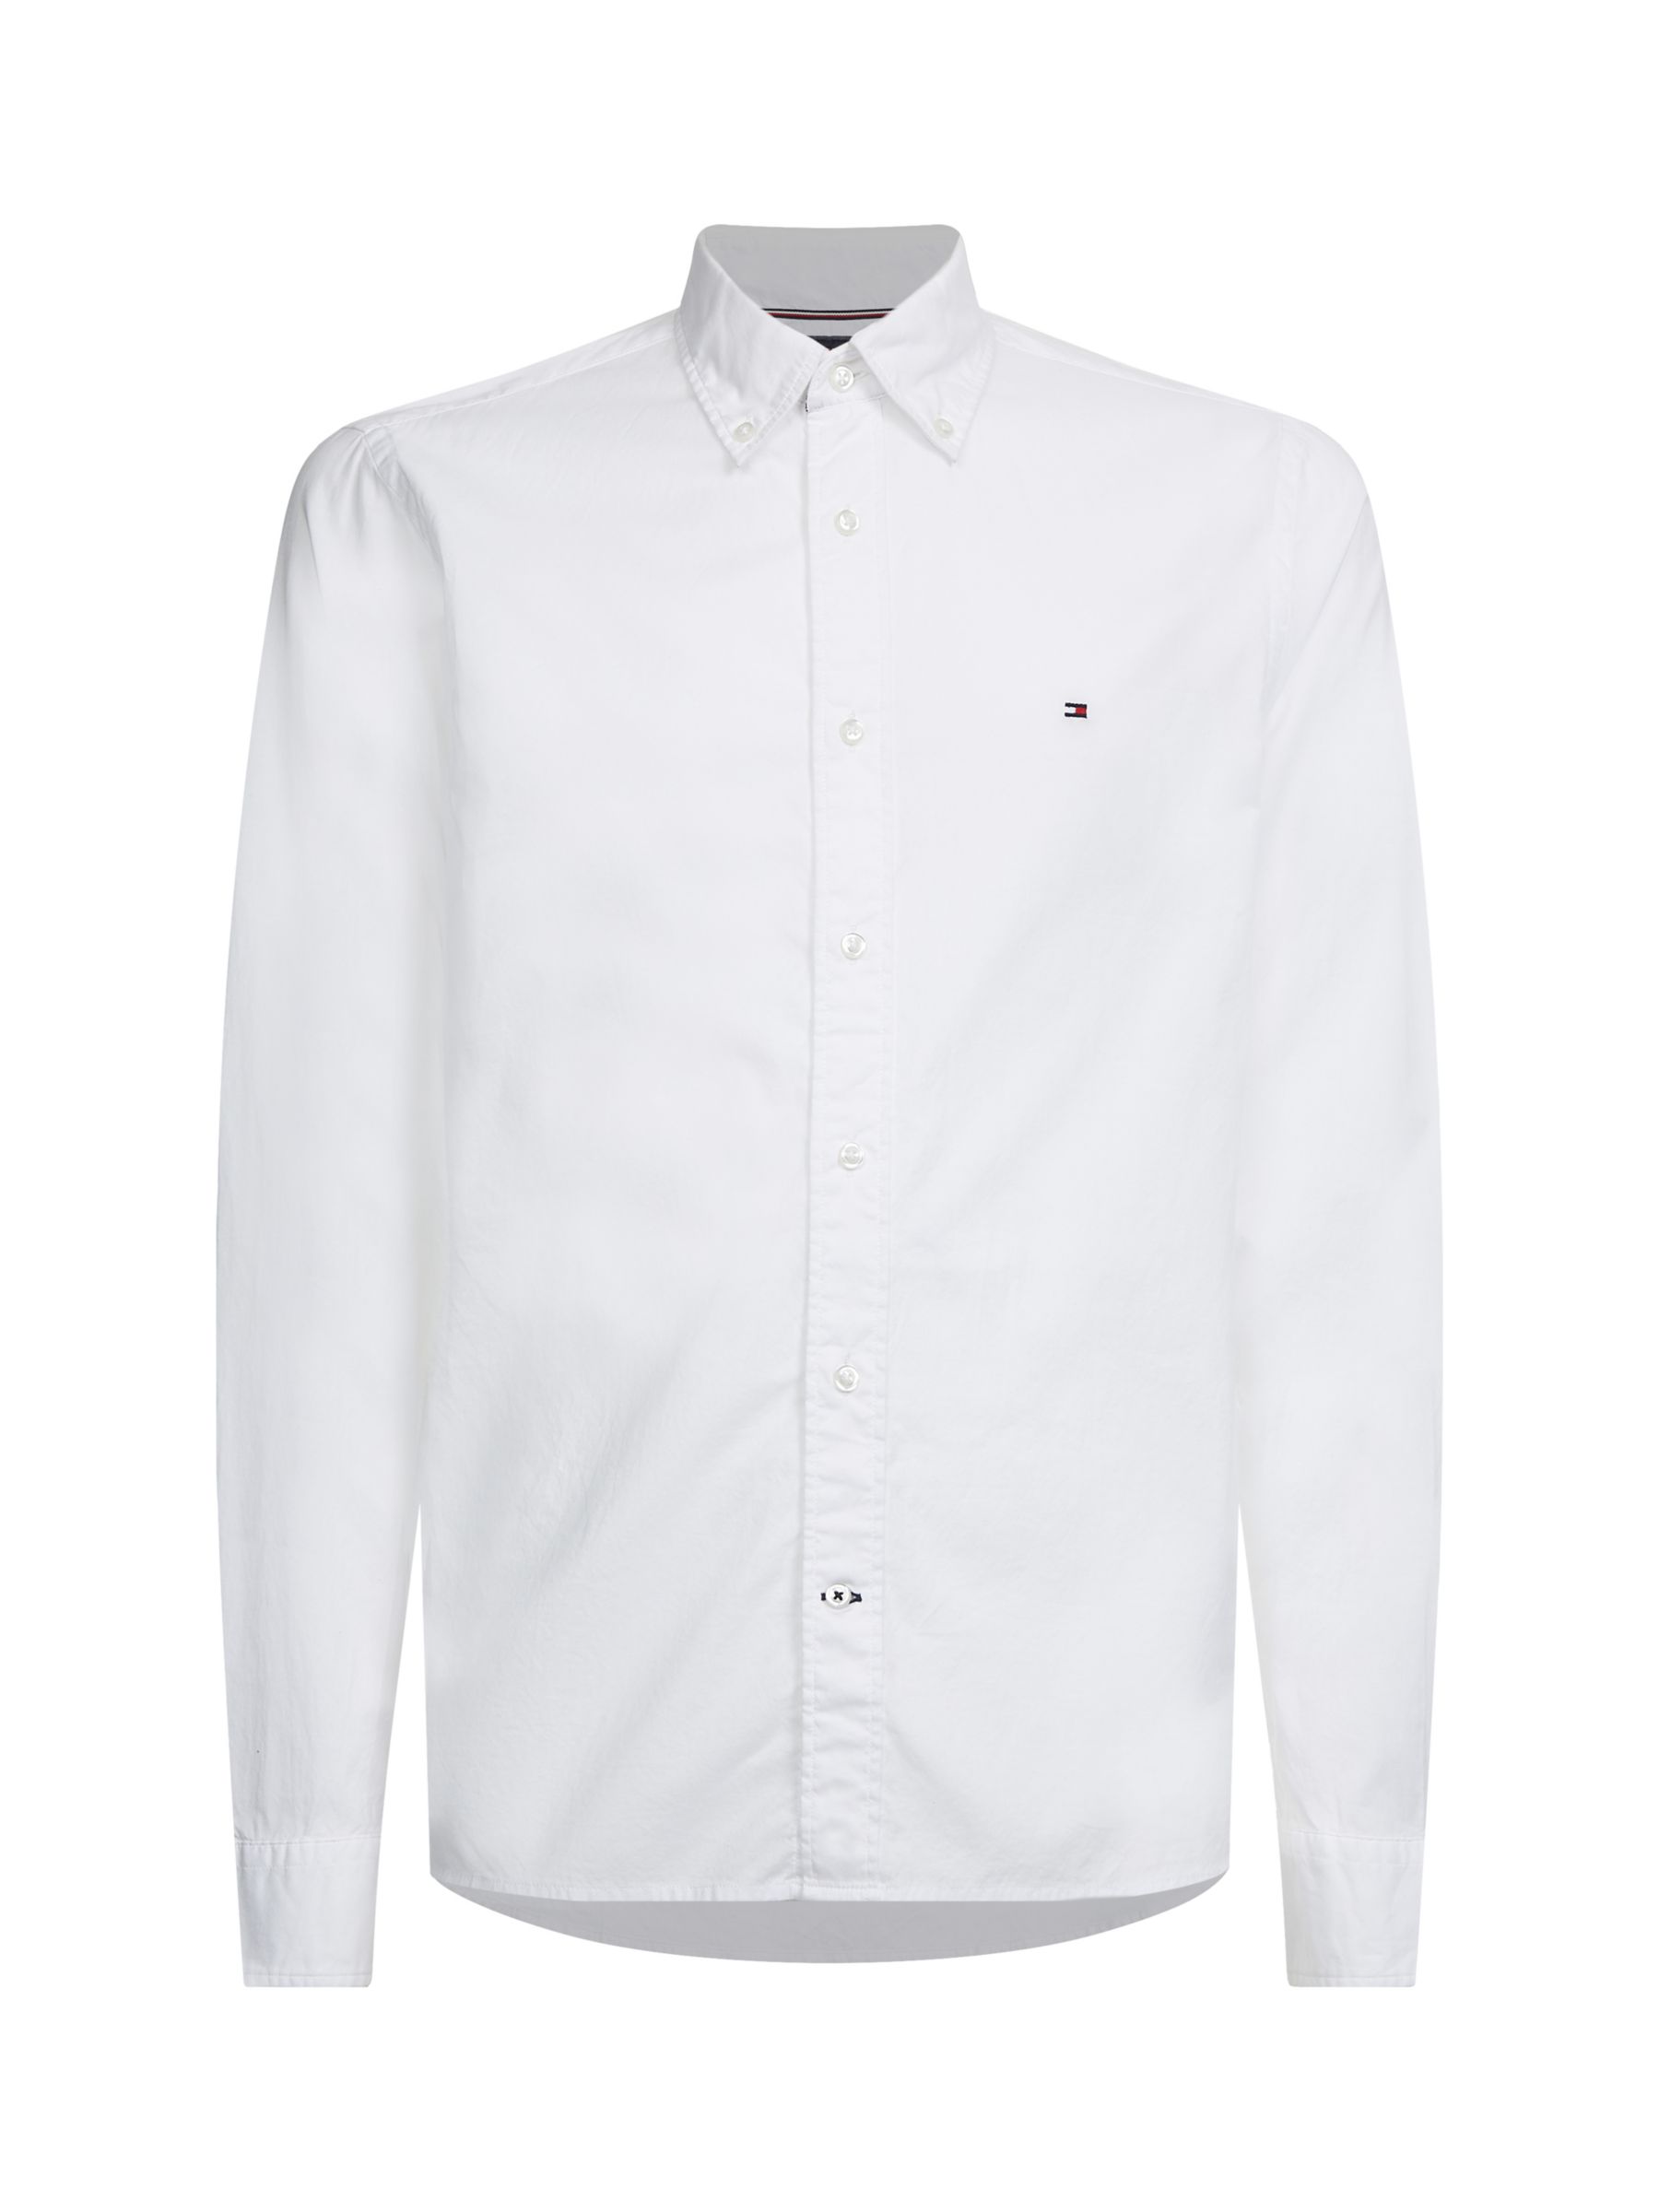 Tommy Hilfiger Poplin Shirt, White, XS